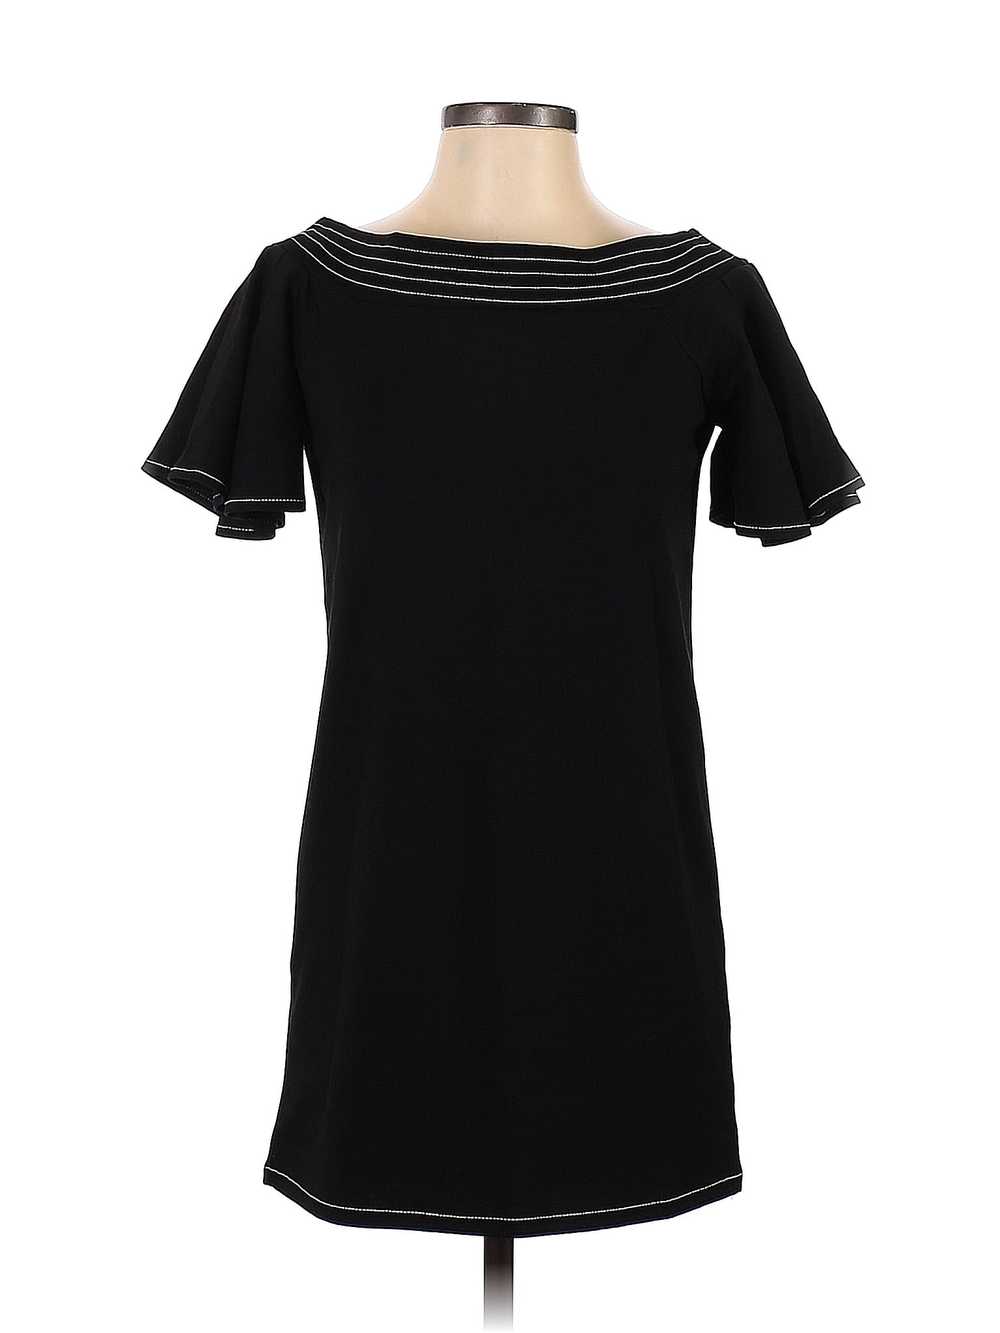 Trafaluc by Zara Women Black Cocktail Dress S - image 1